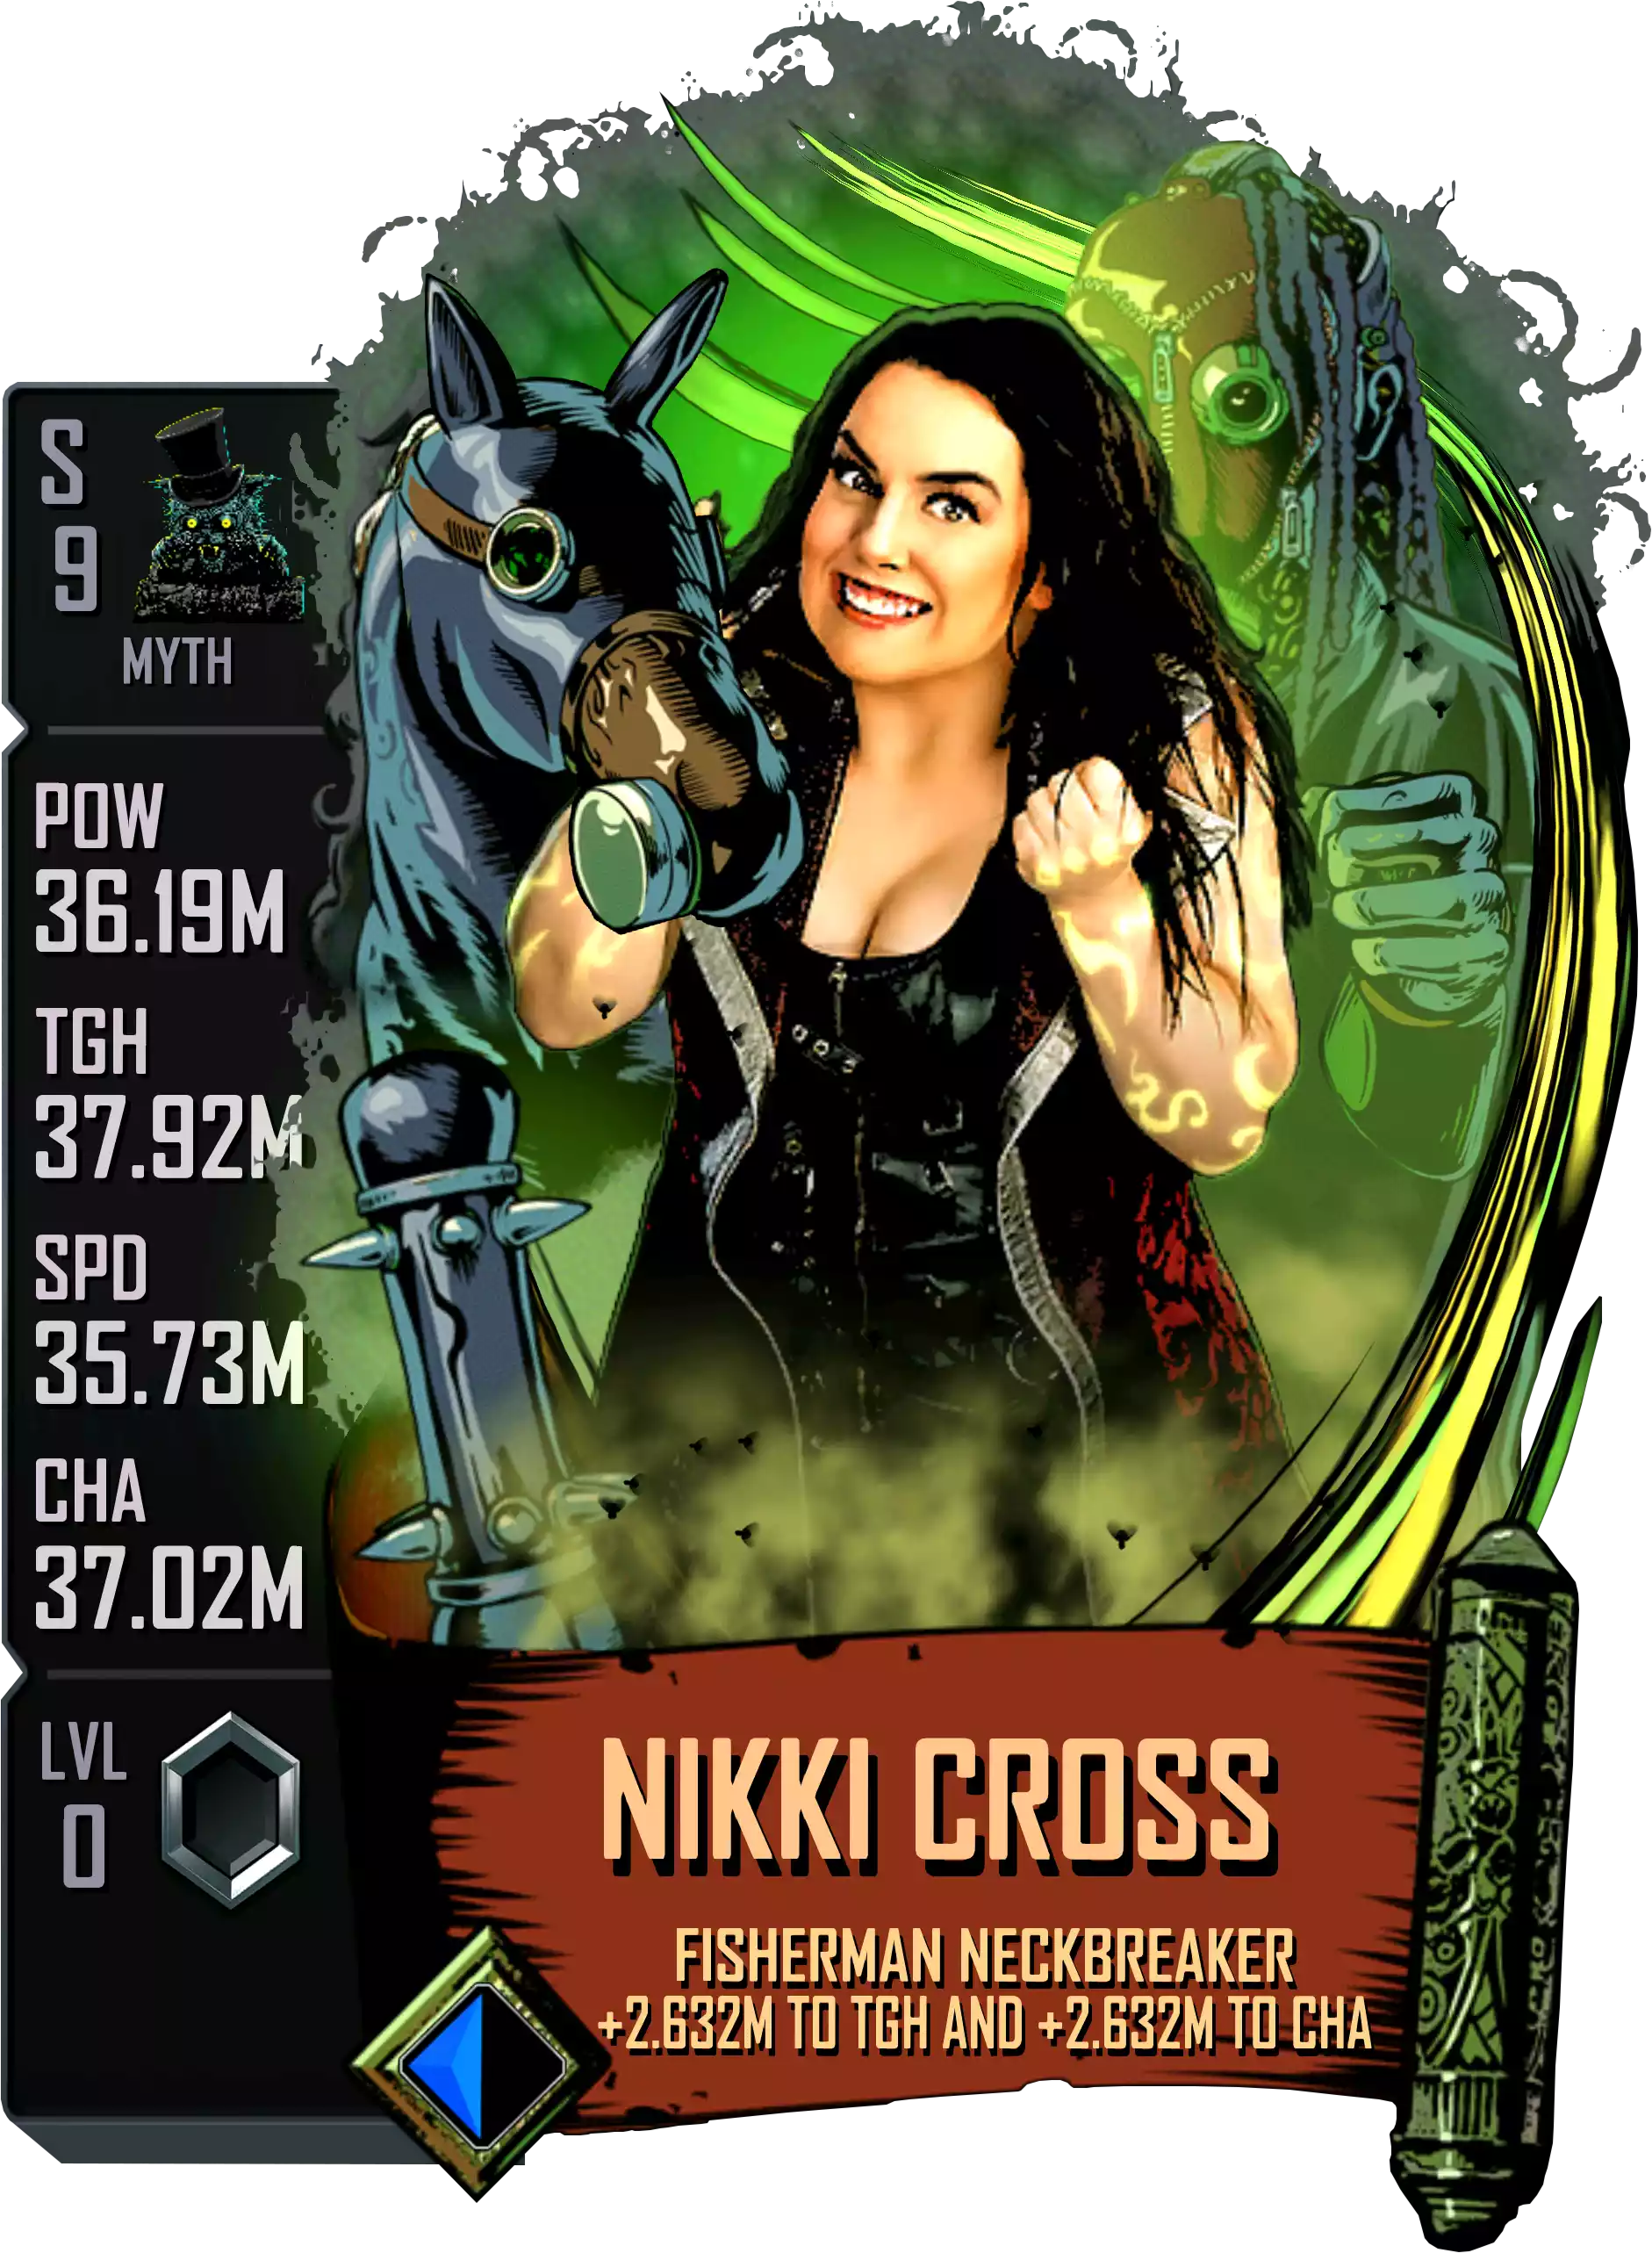 Myth - Nikki Cross Special Seasonal Halloween Card from WWE Supercard